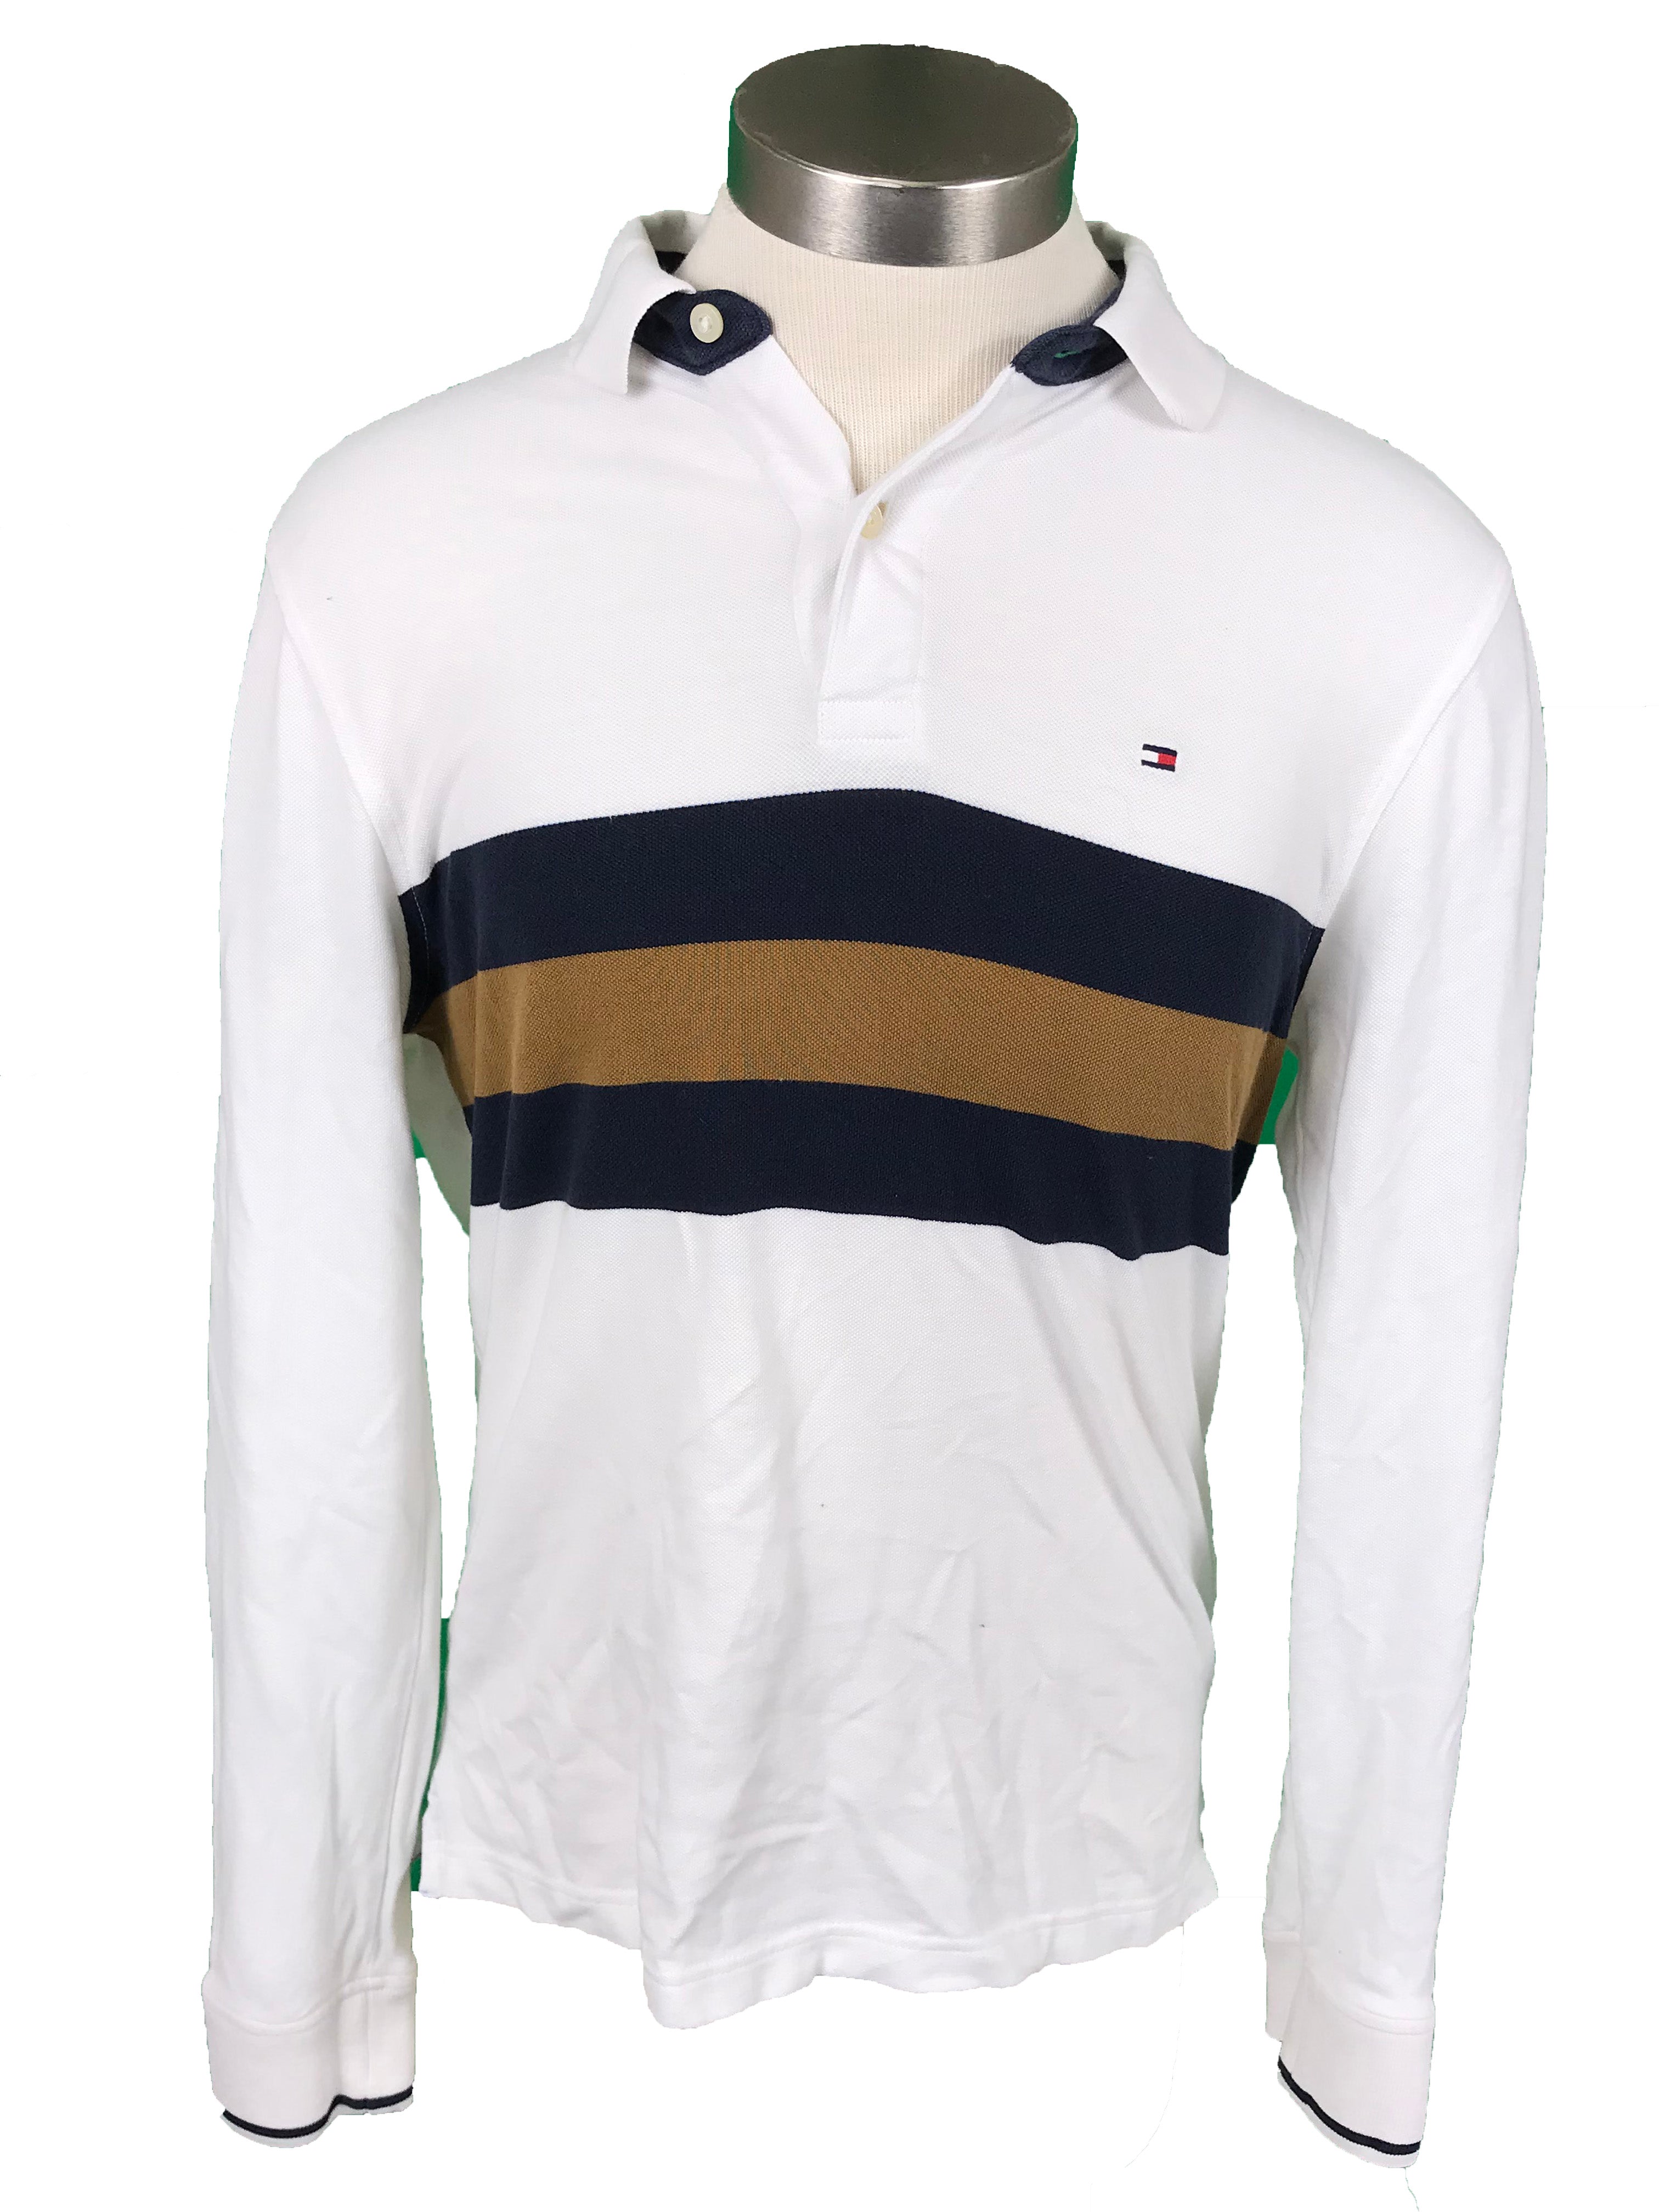 Tommy Hilfiger White Long-Sleeve Polo Men's Size Medium